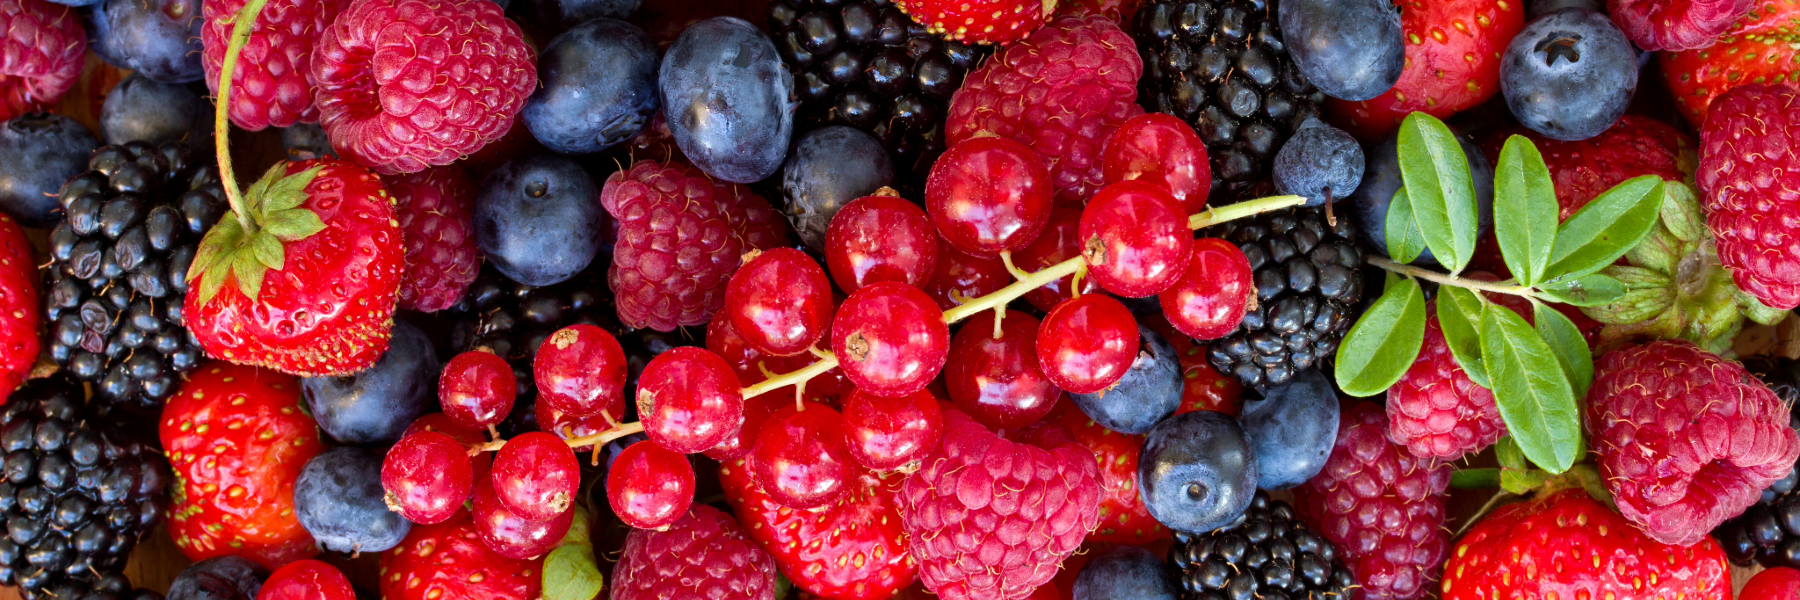 What Makes Berries, SUPER Berries?